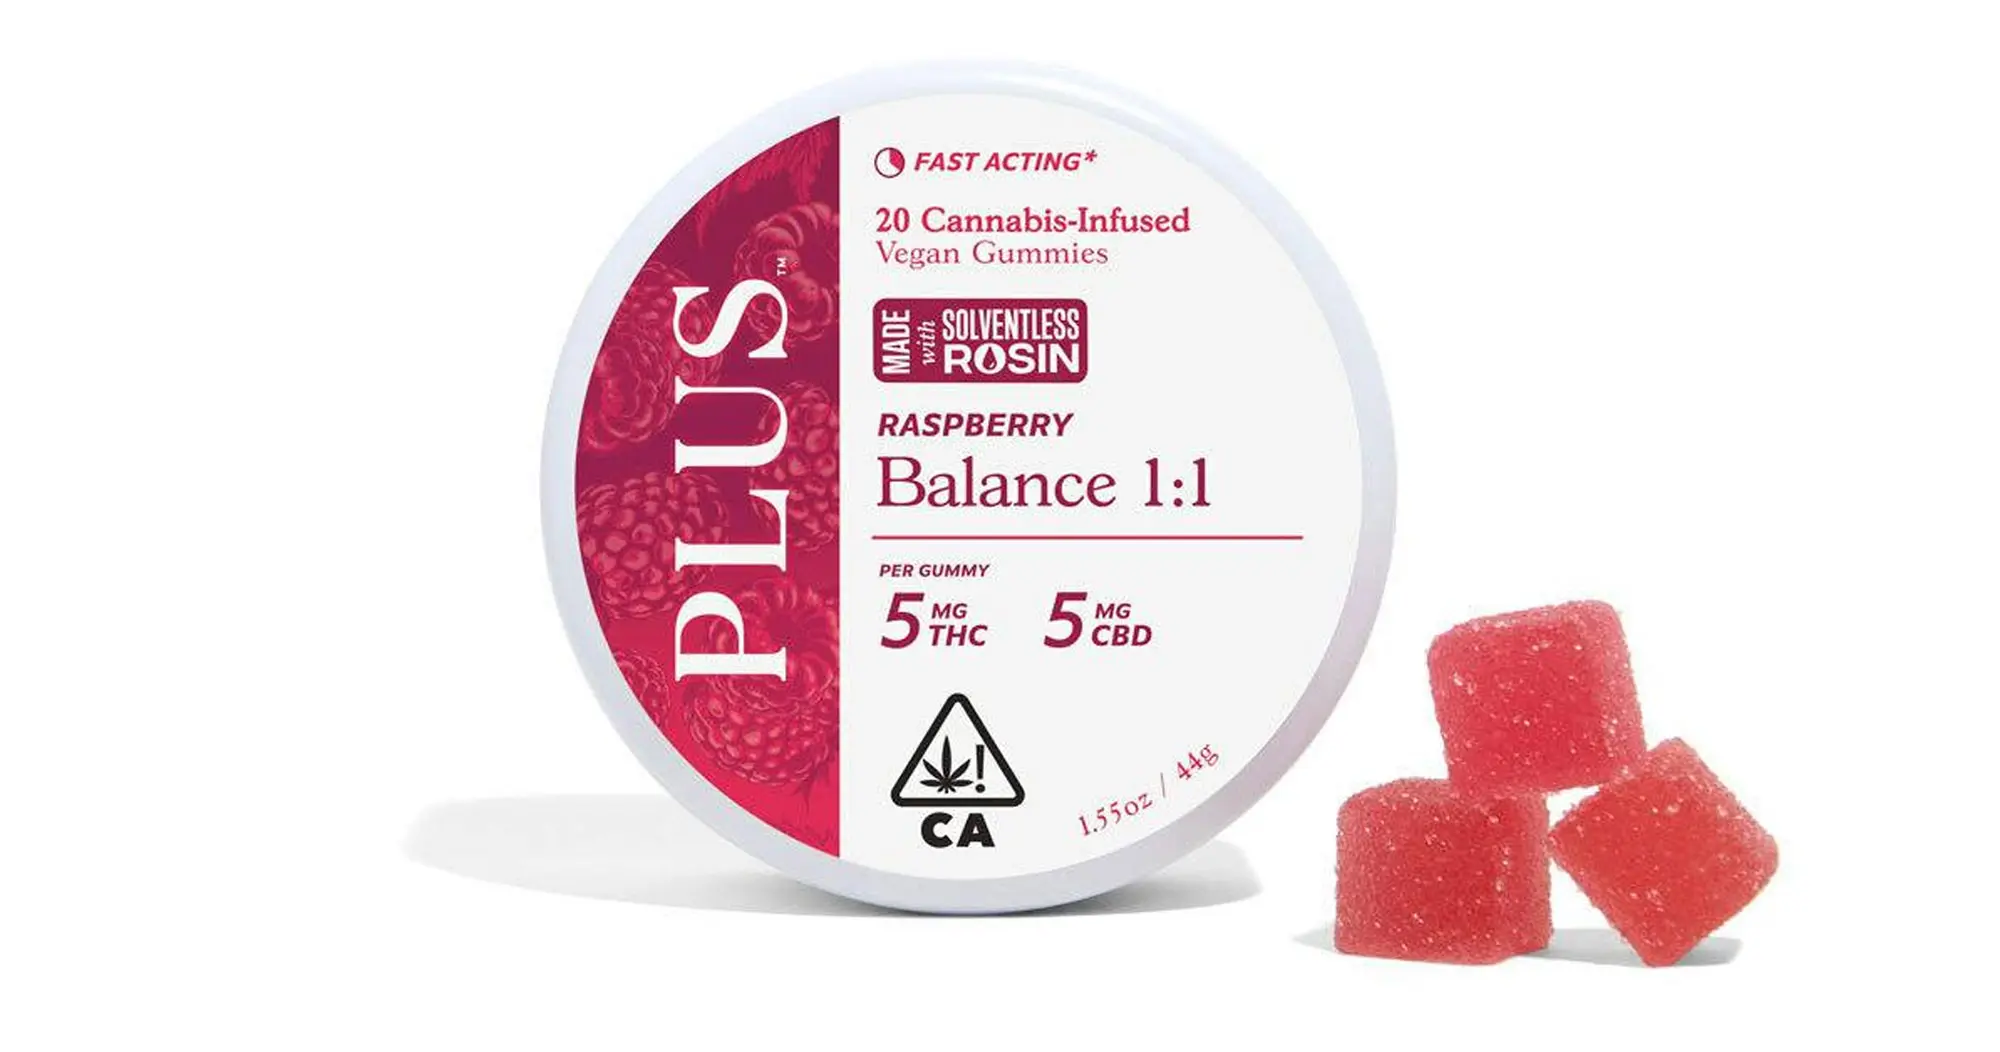 Raspberry 1:1 Balance Rosin Gummies